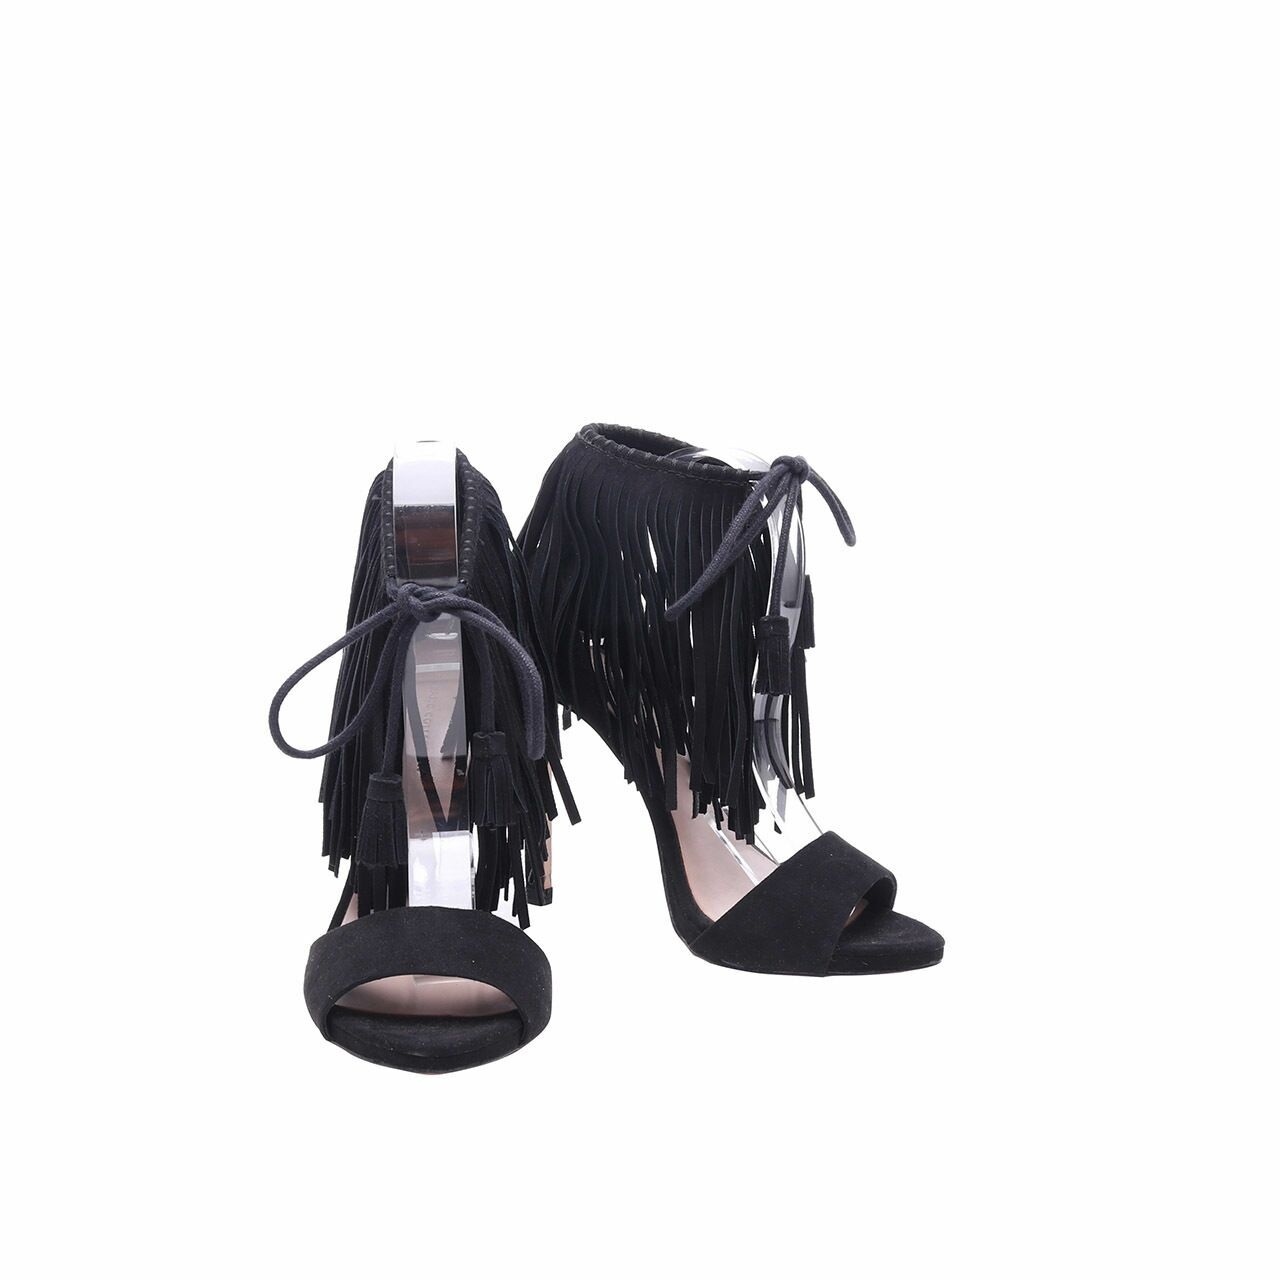 Zara Black Suede Fringe Ankle Heels